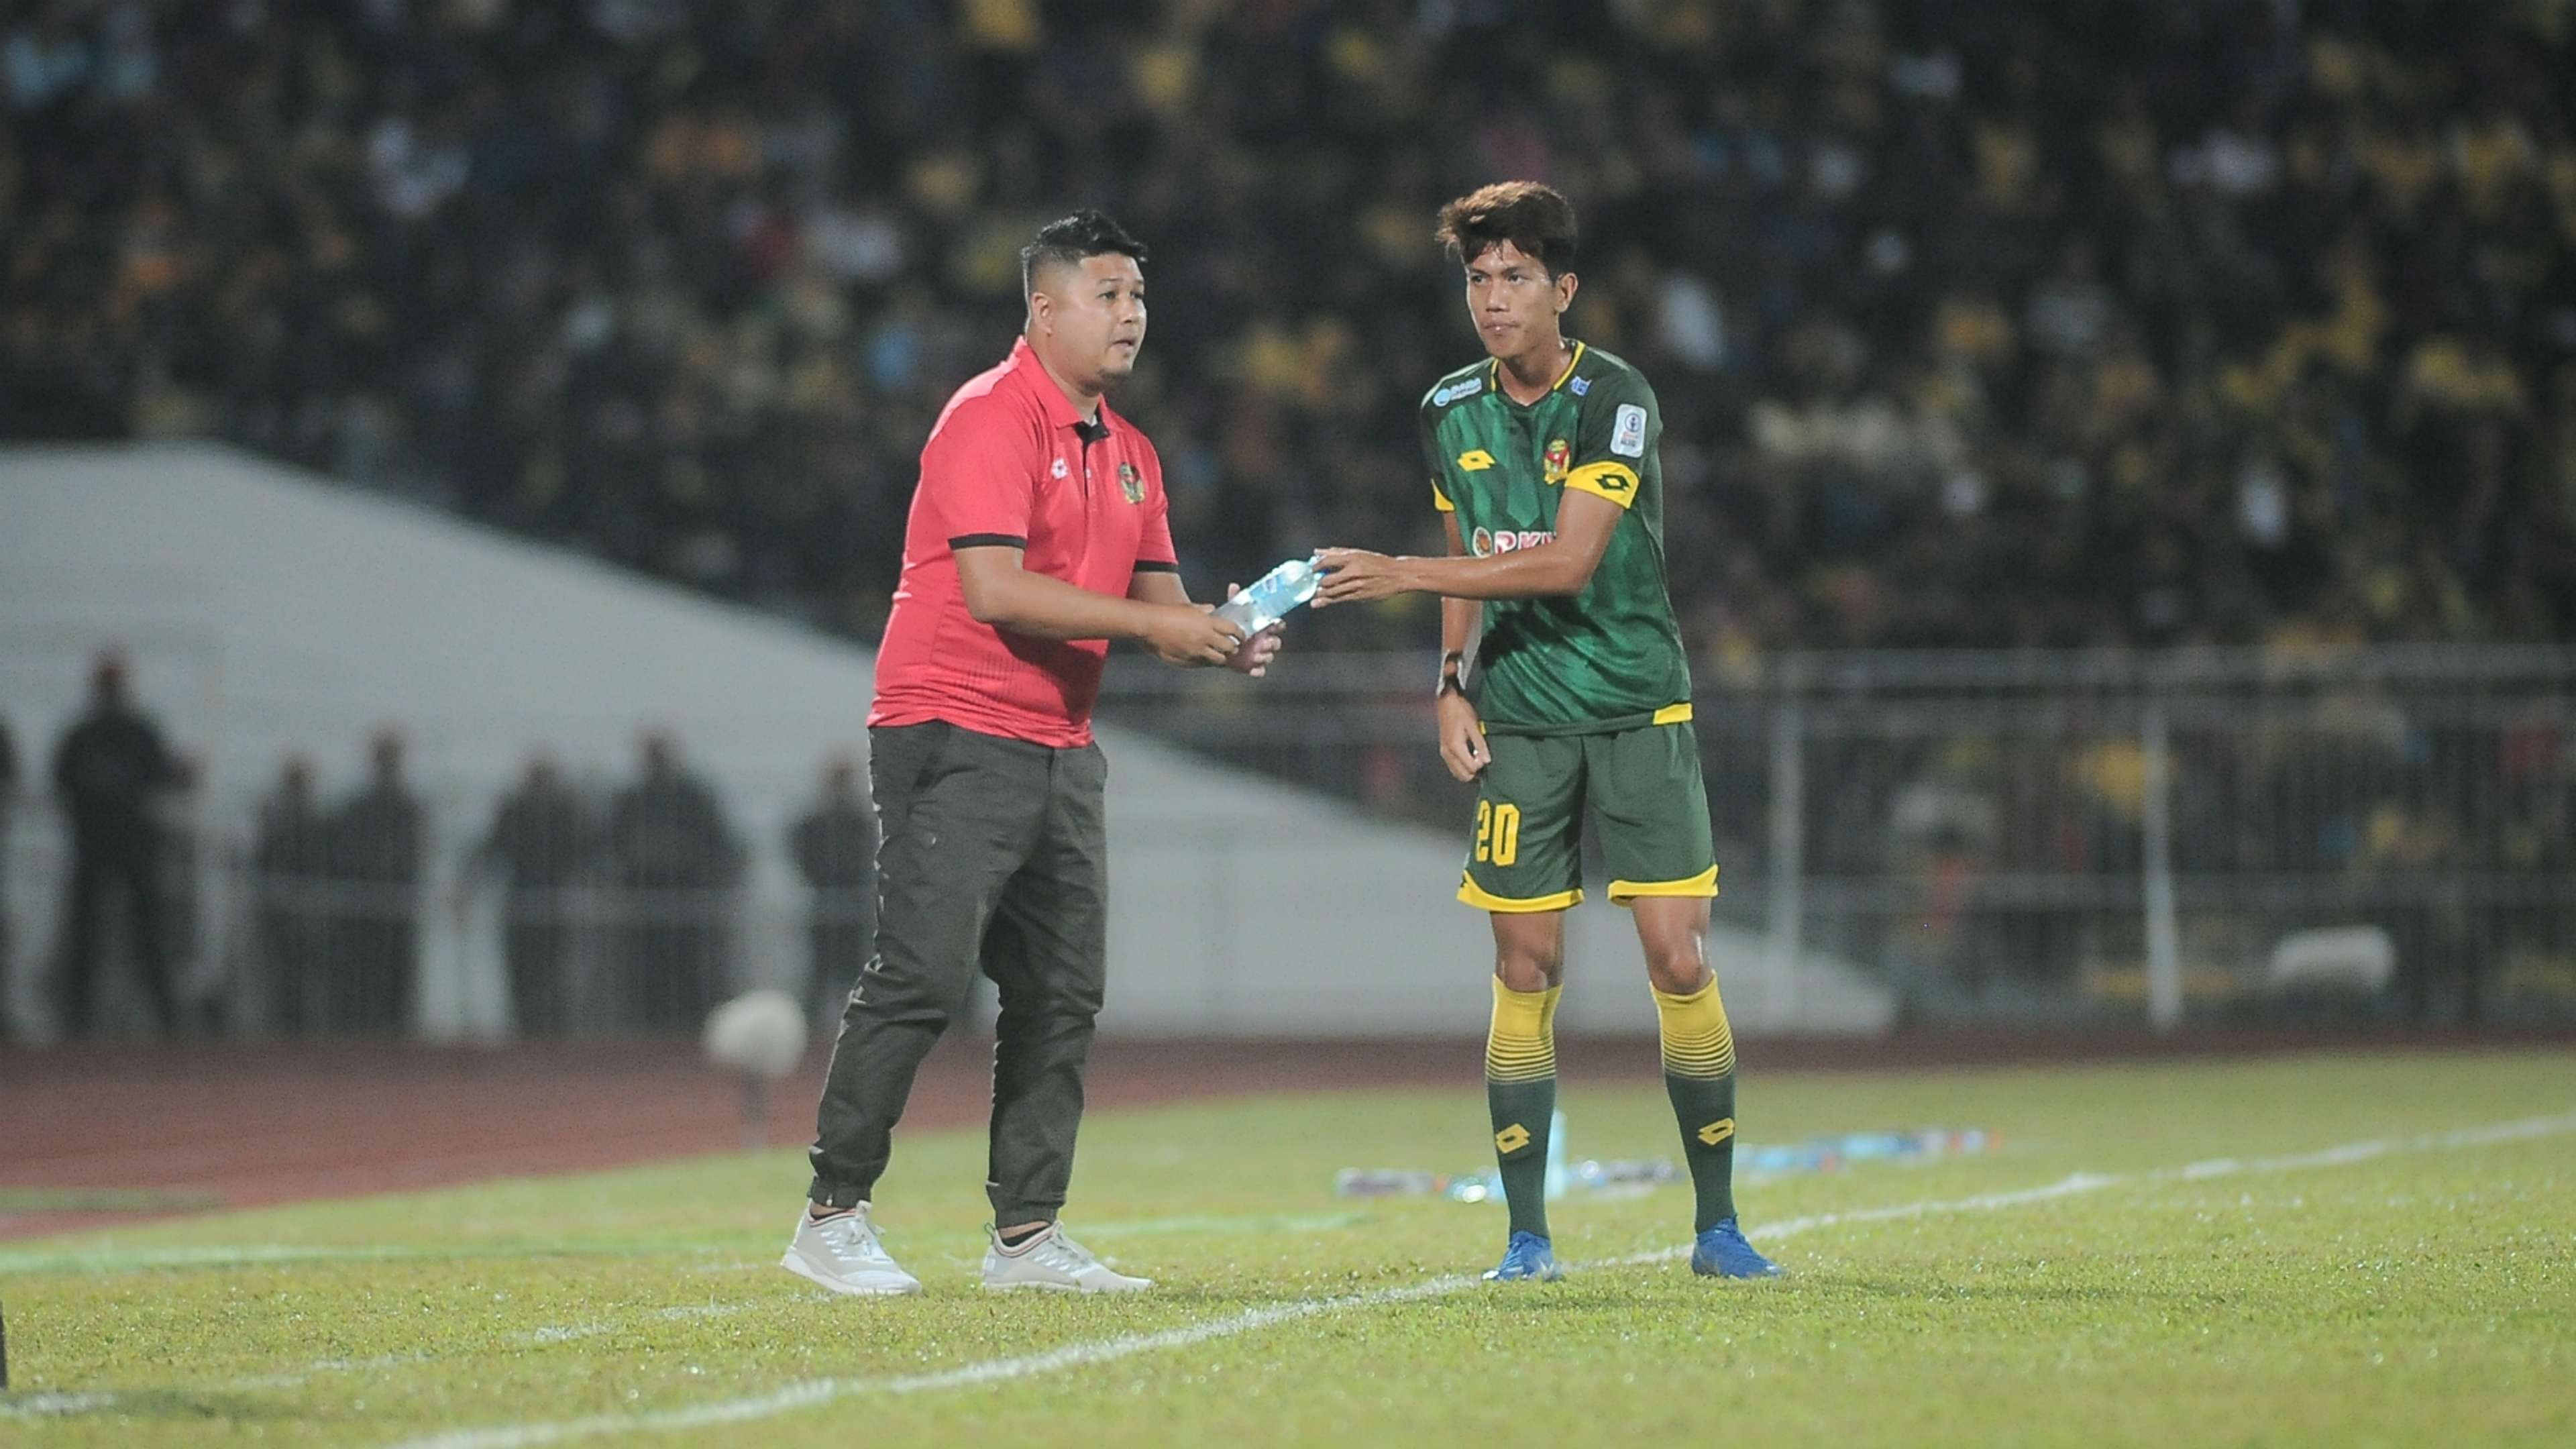 Aidil Shahrin, Perak v Kedah, Super League, 8 Feb 2019